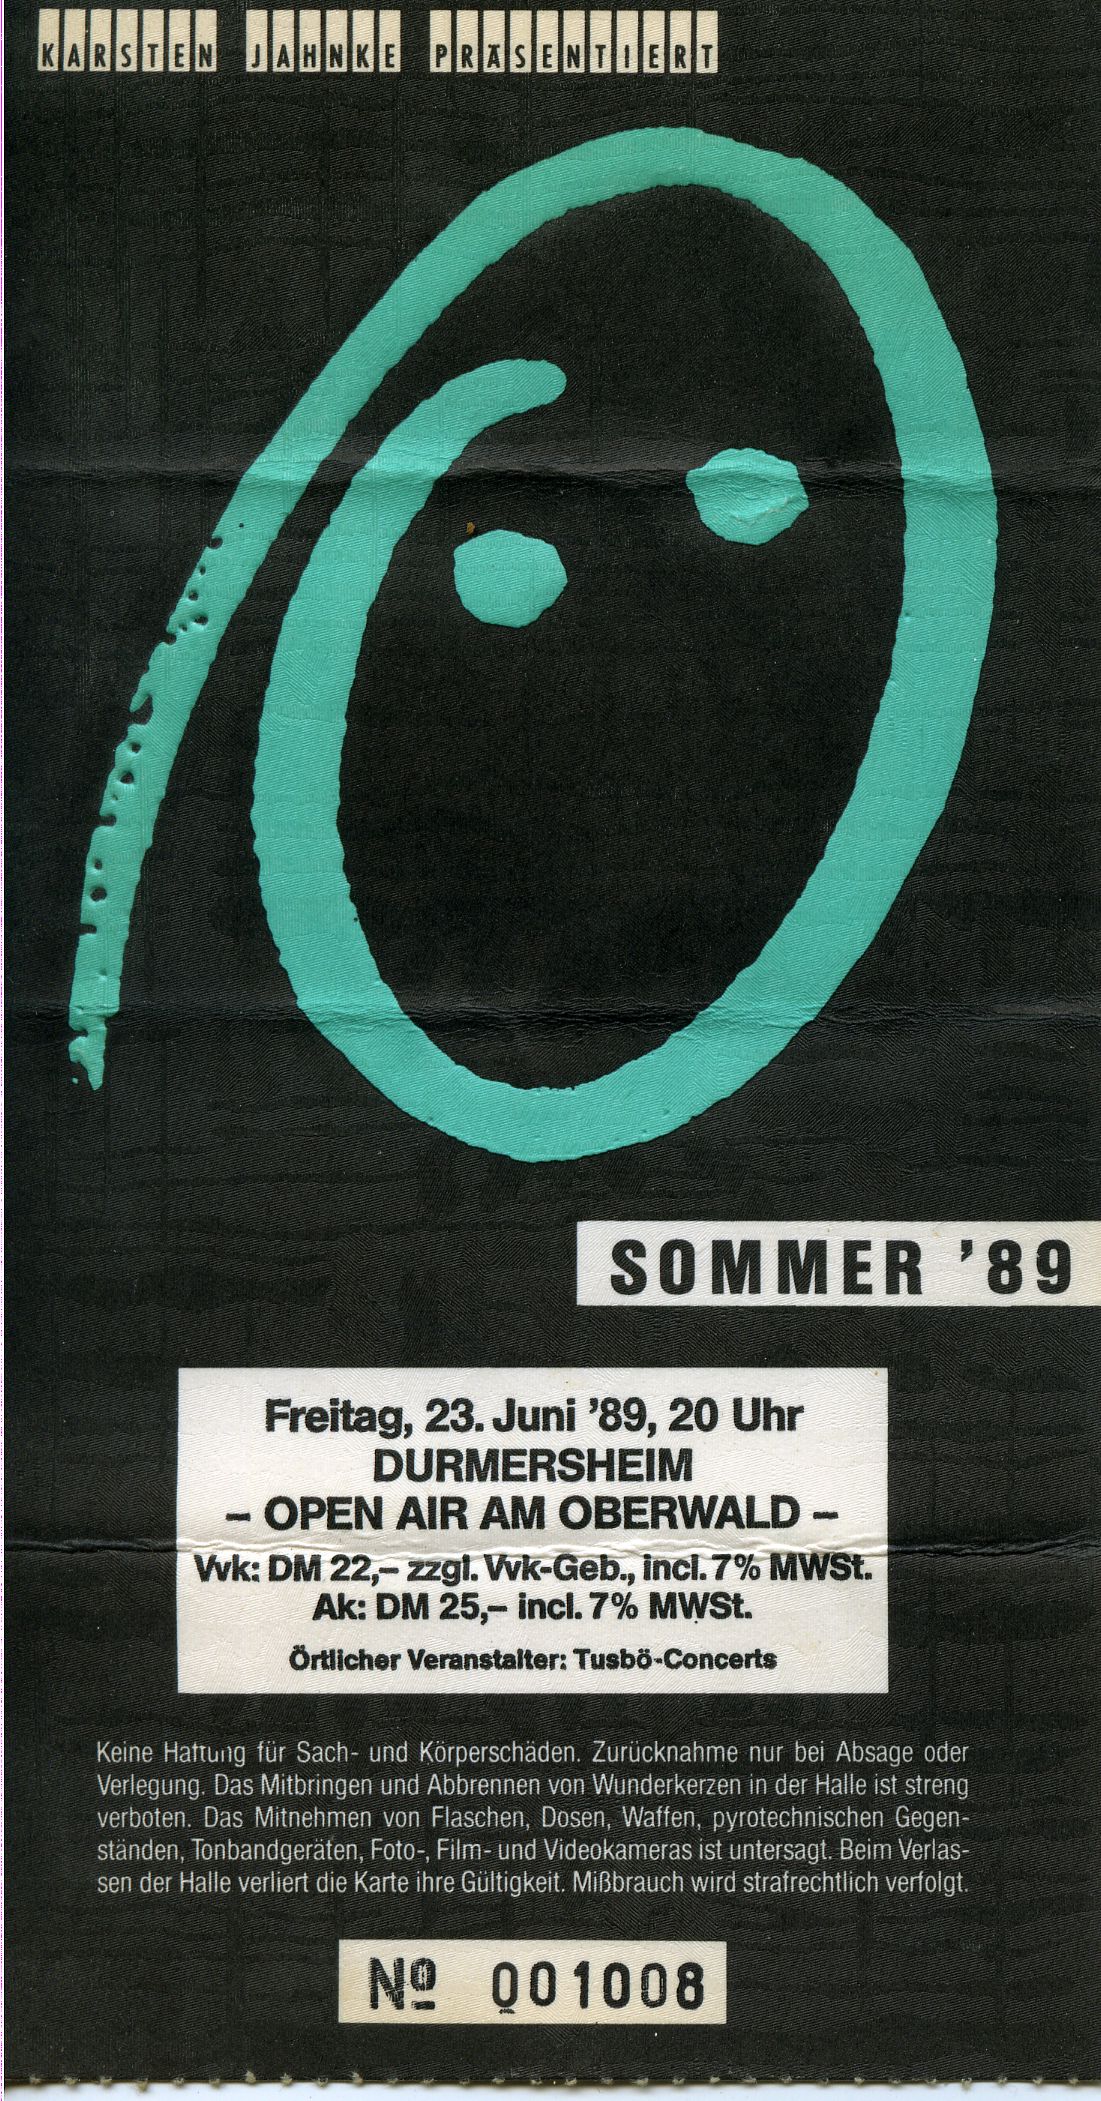 Grönemeyer Durmersheim 1989.jpg